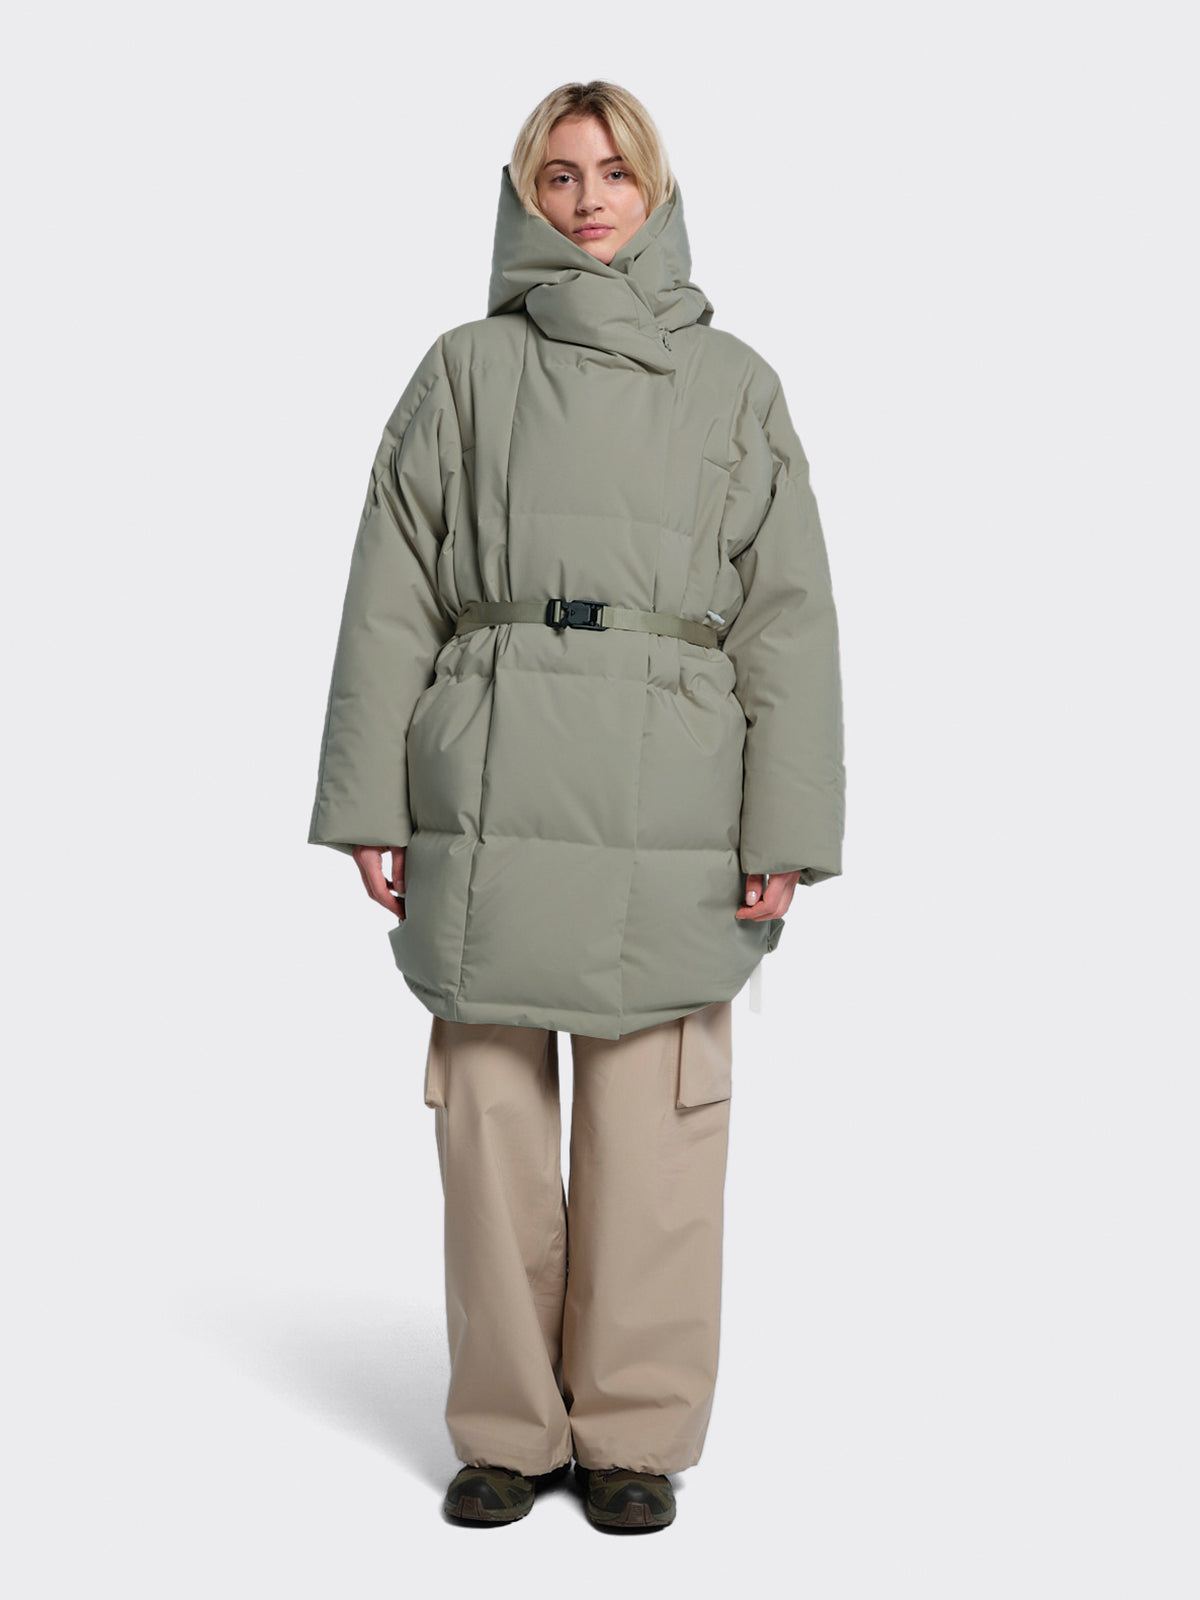 Spitsbergen jacket